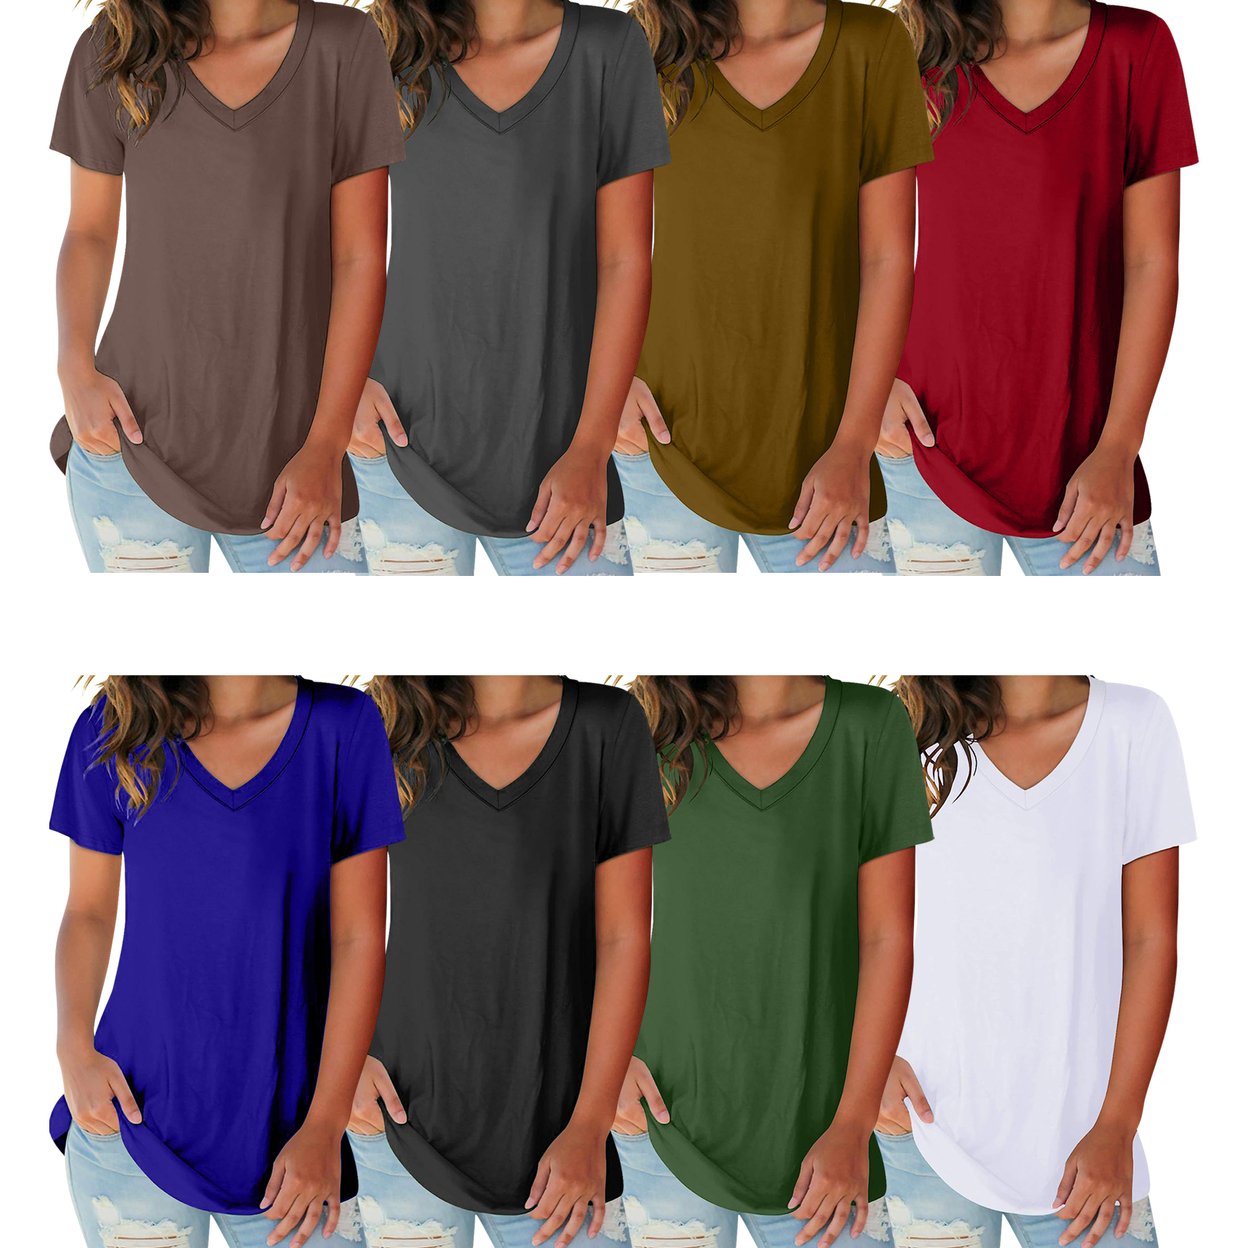 6-Pack: Women's Ultra Soft Smooth Cotton Blend Basic V-Neck Short Sleeve Shirts - Medium